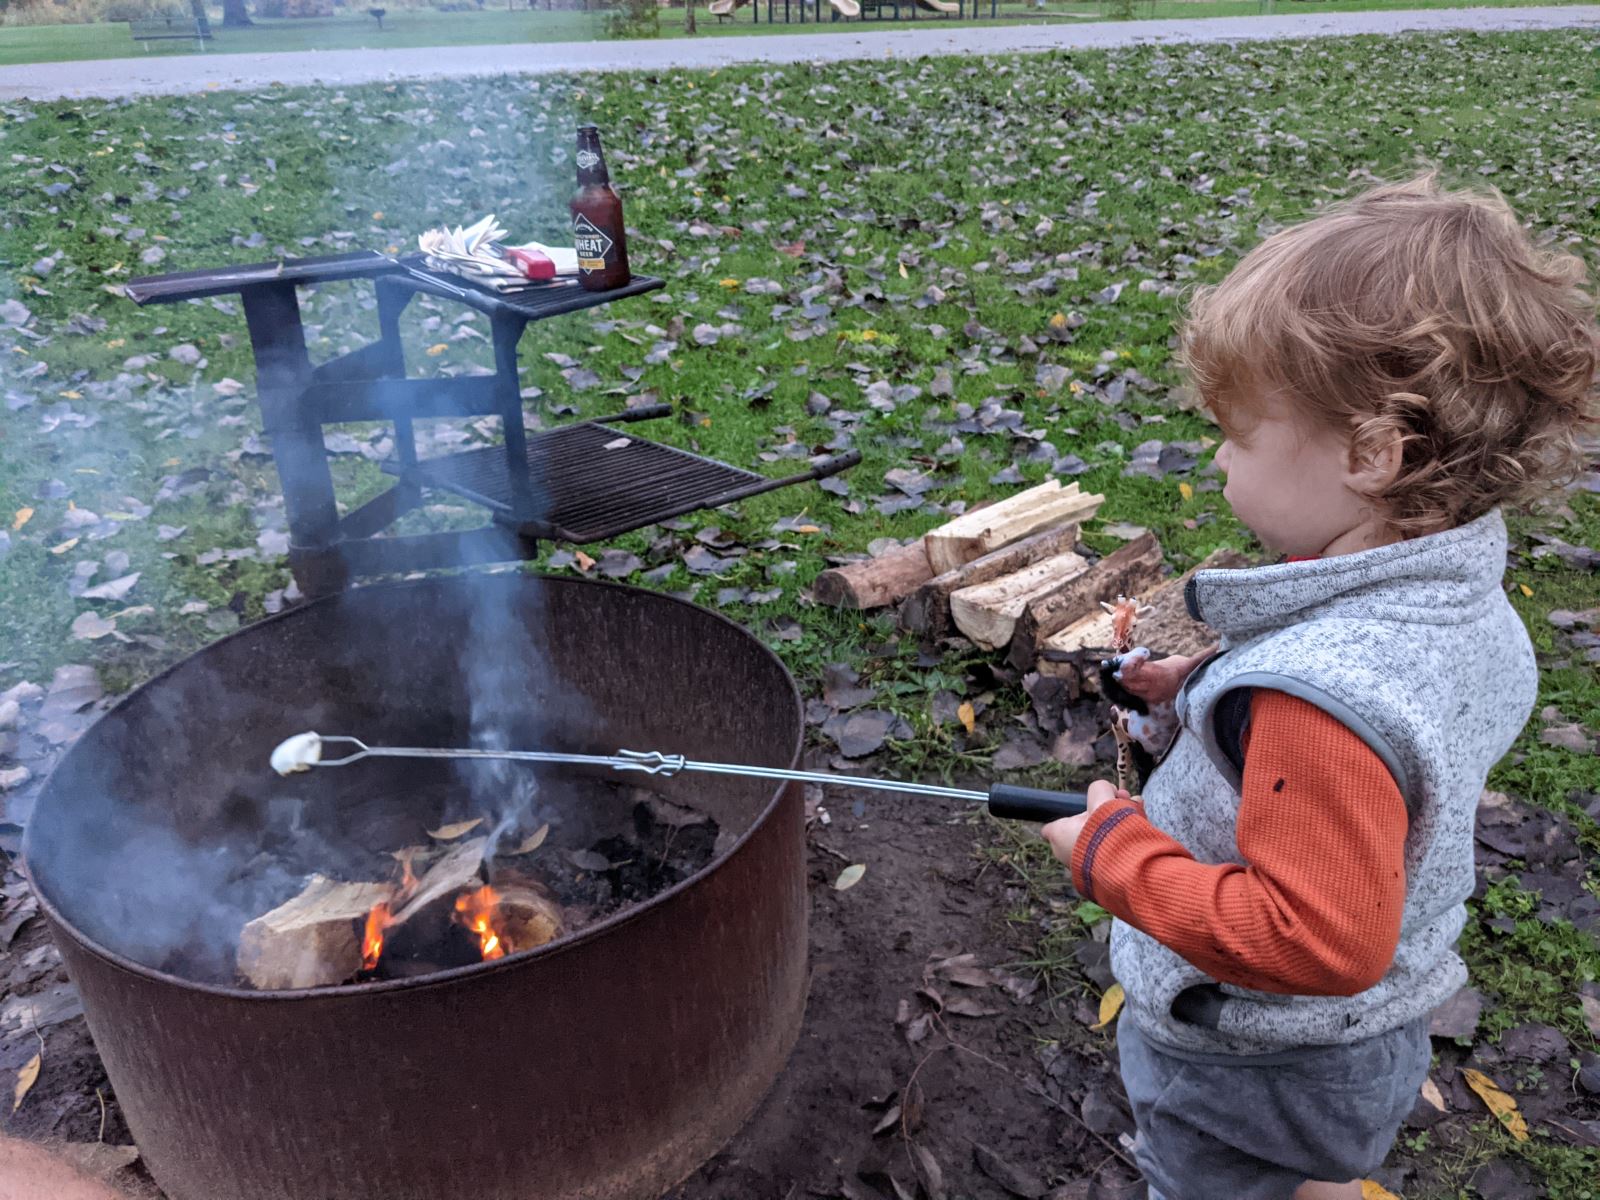 Boy roasting marshmallows